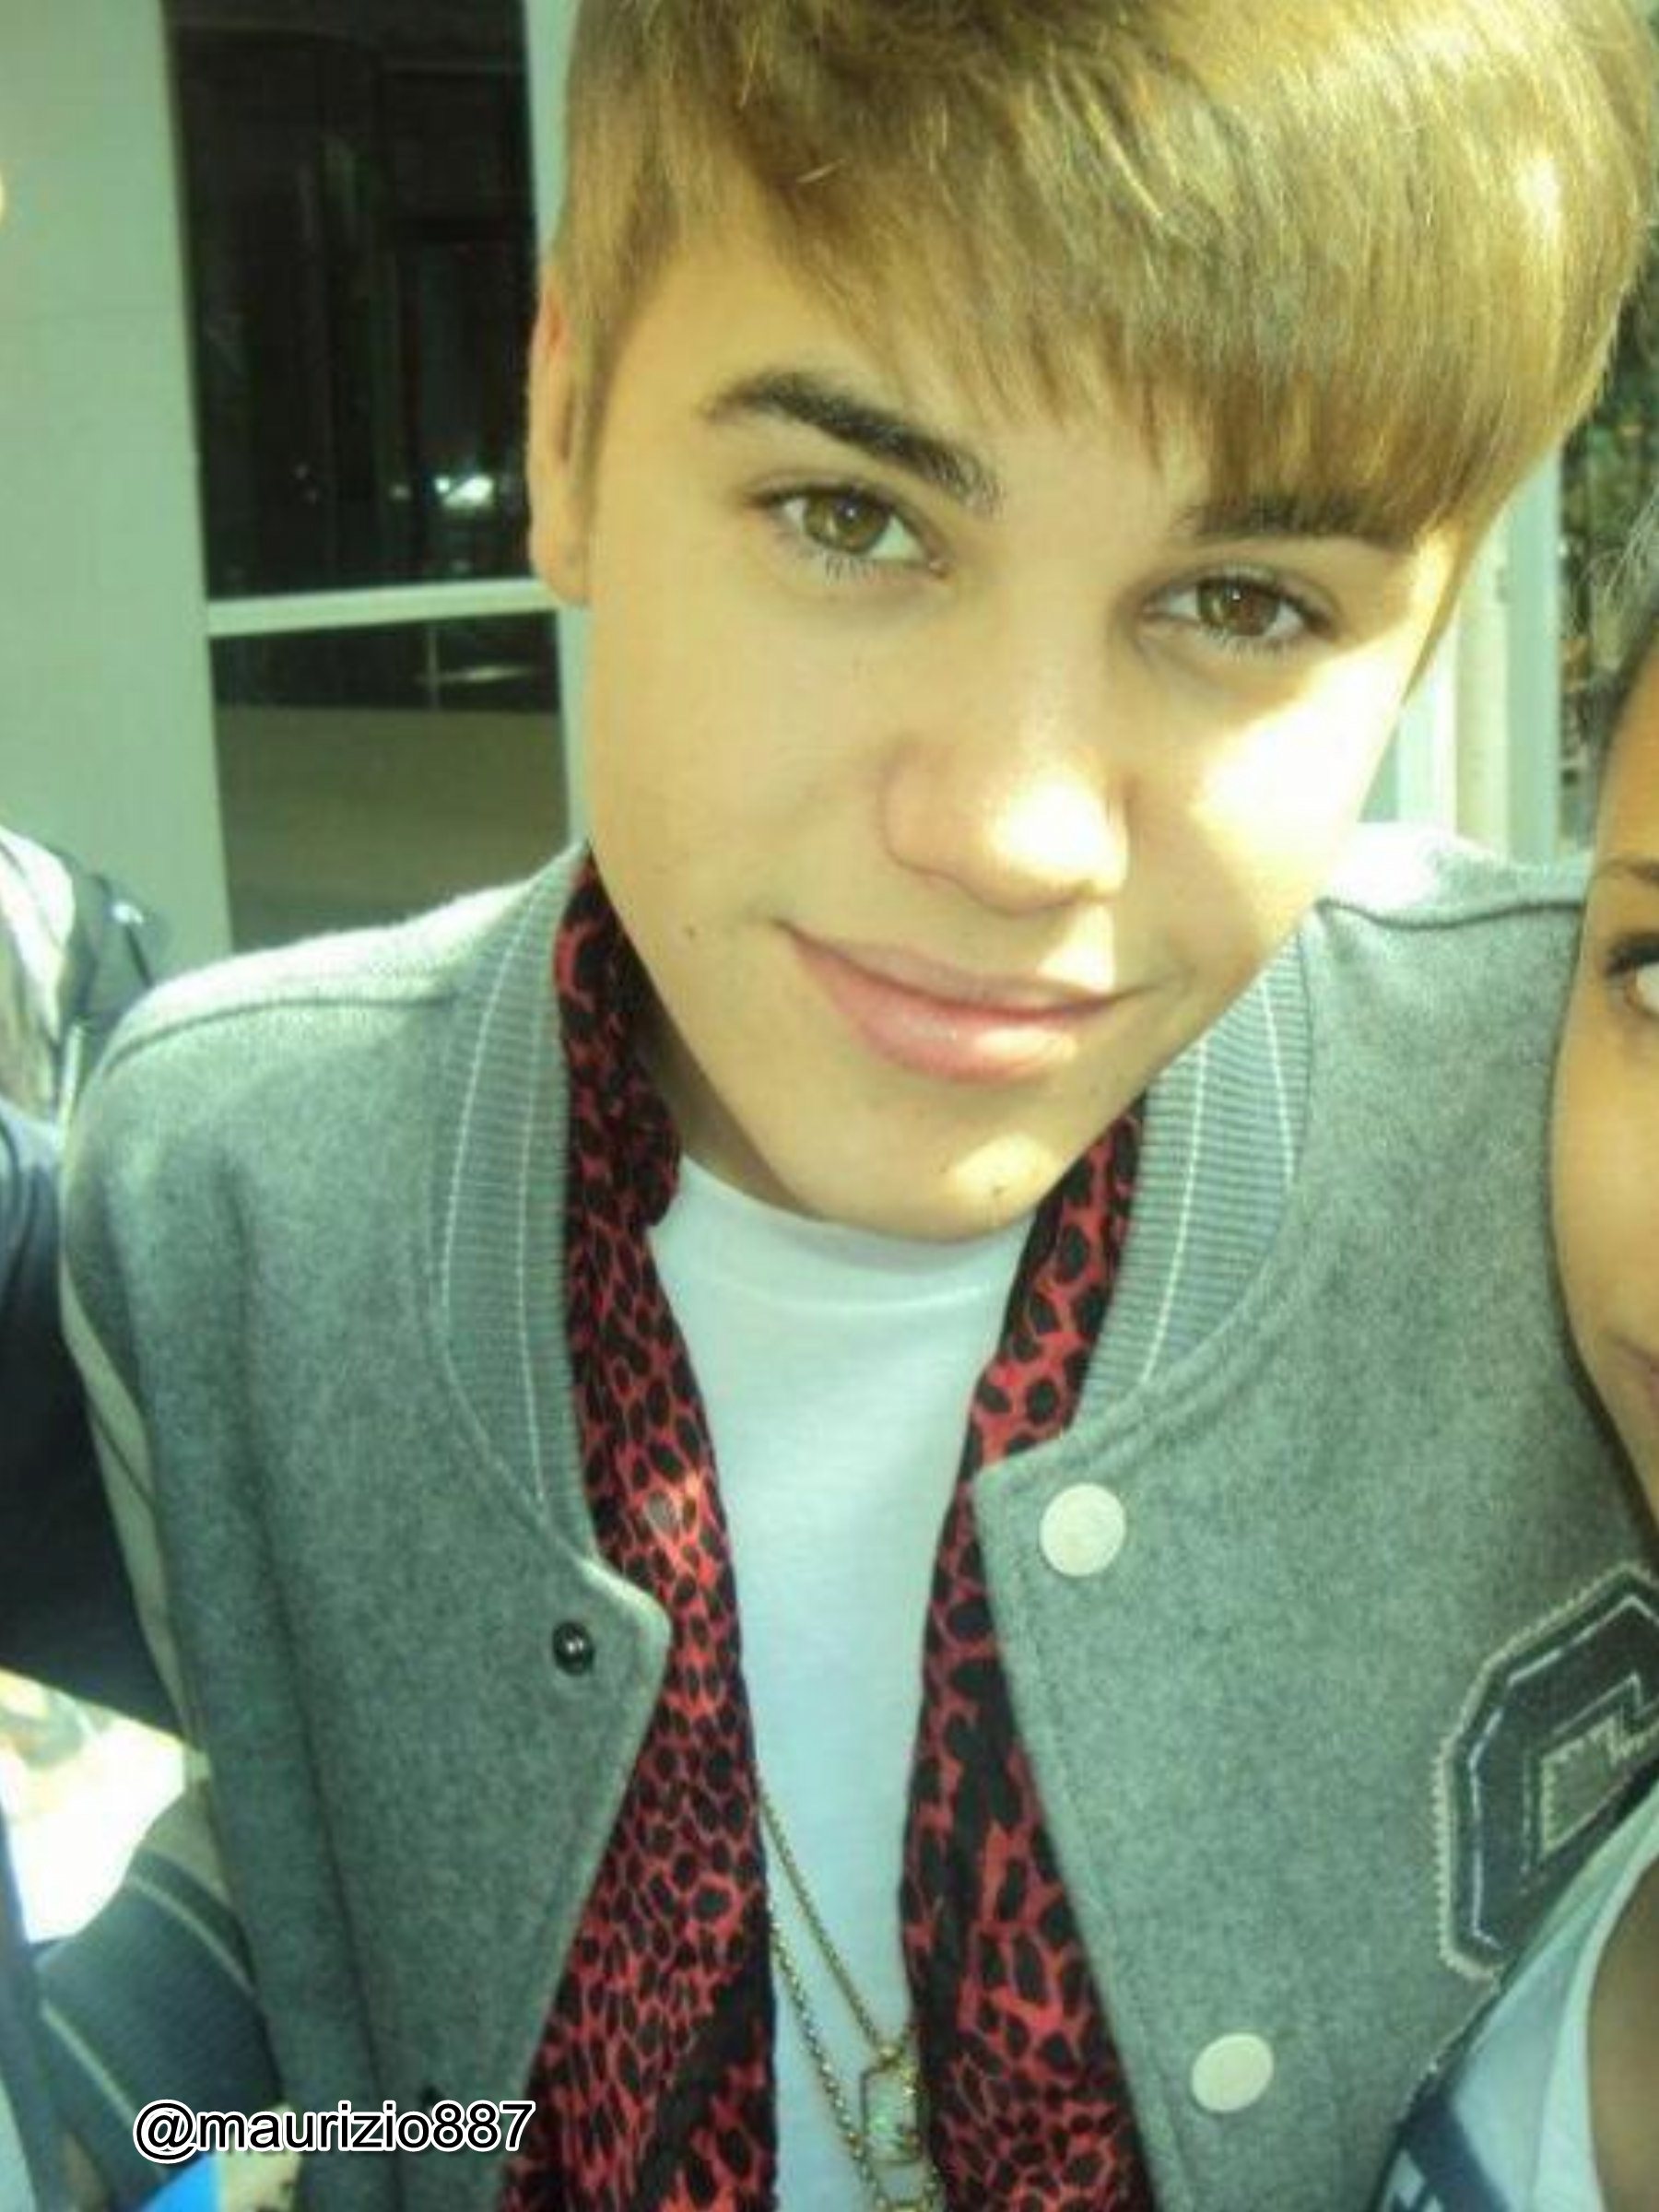 justin bieber, italy, 2012 - Justin Bieber Photo (31020525) - Fanpop